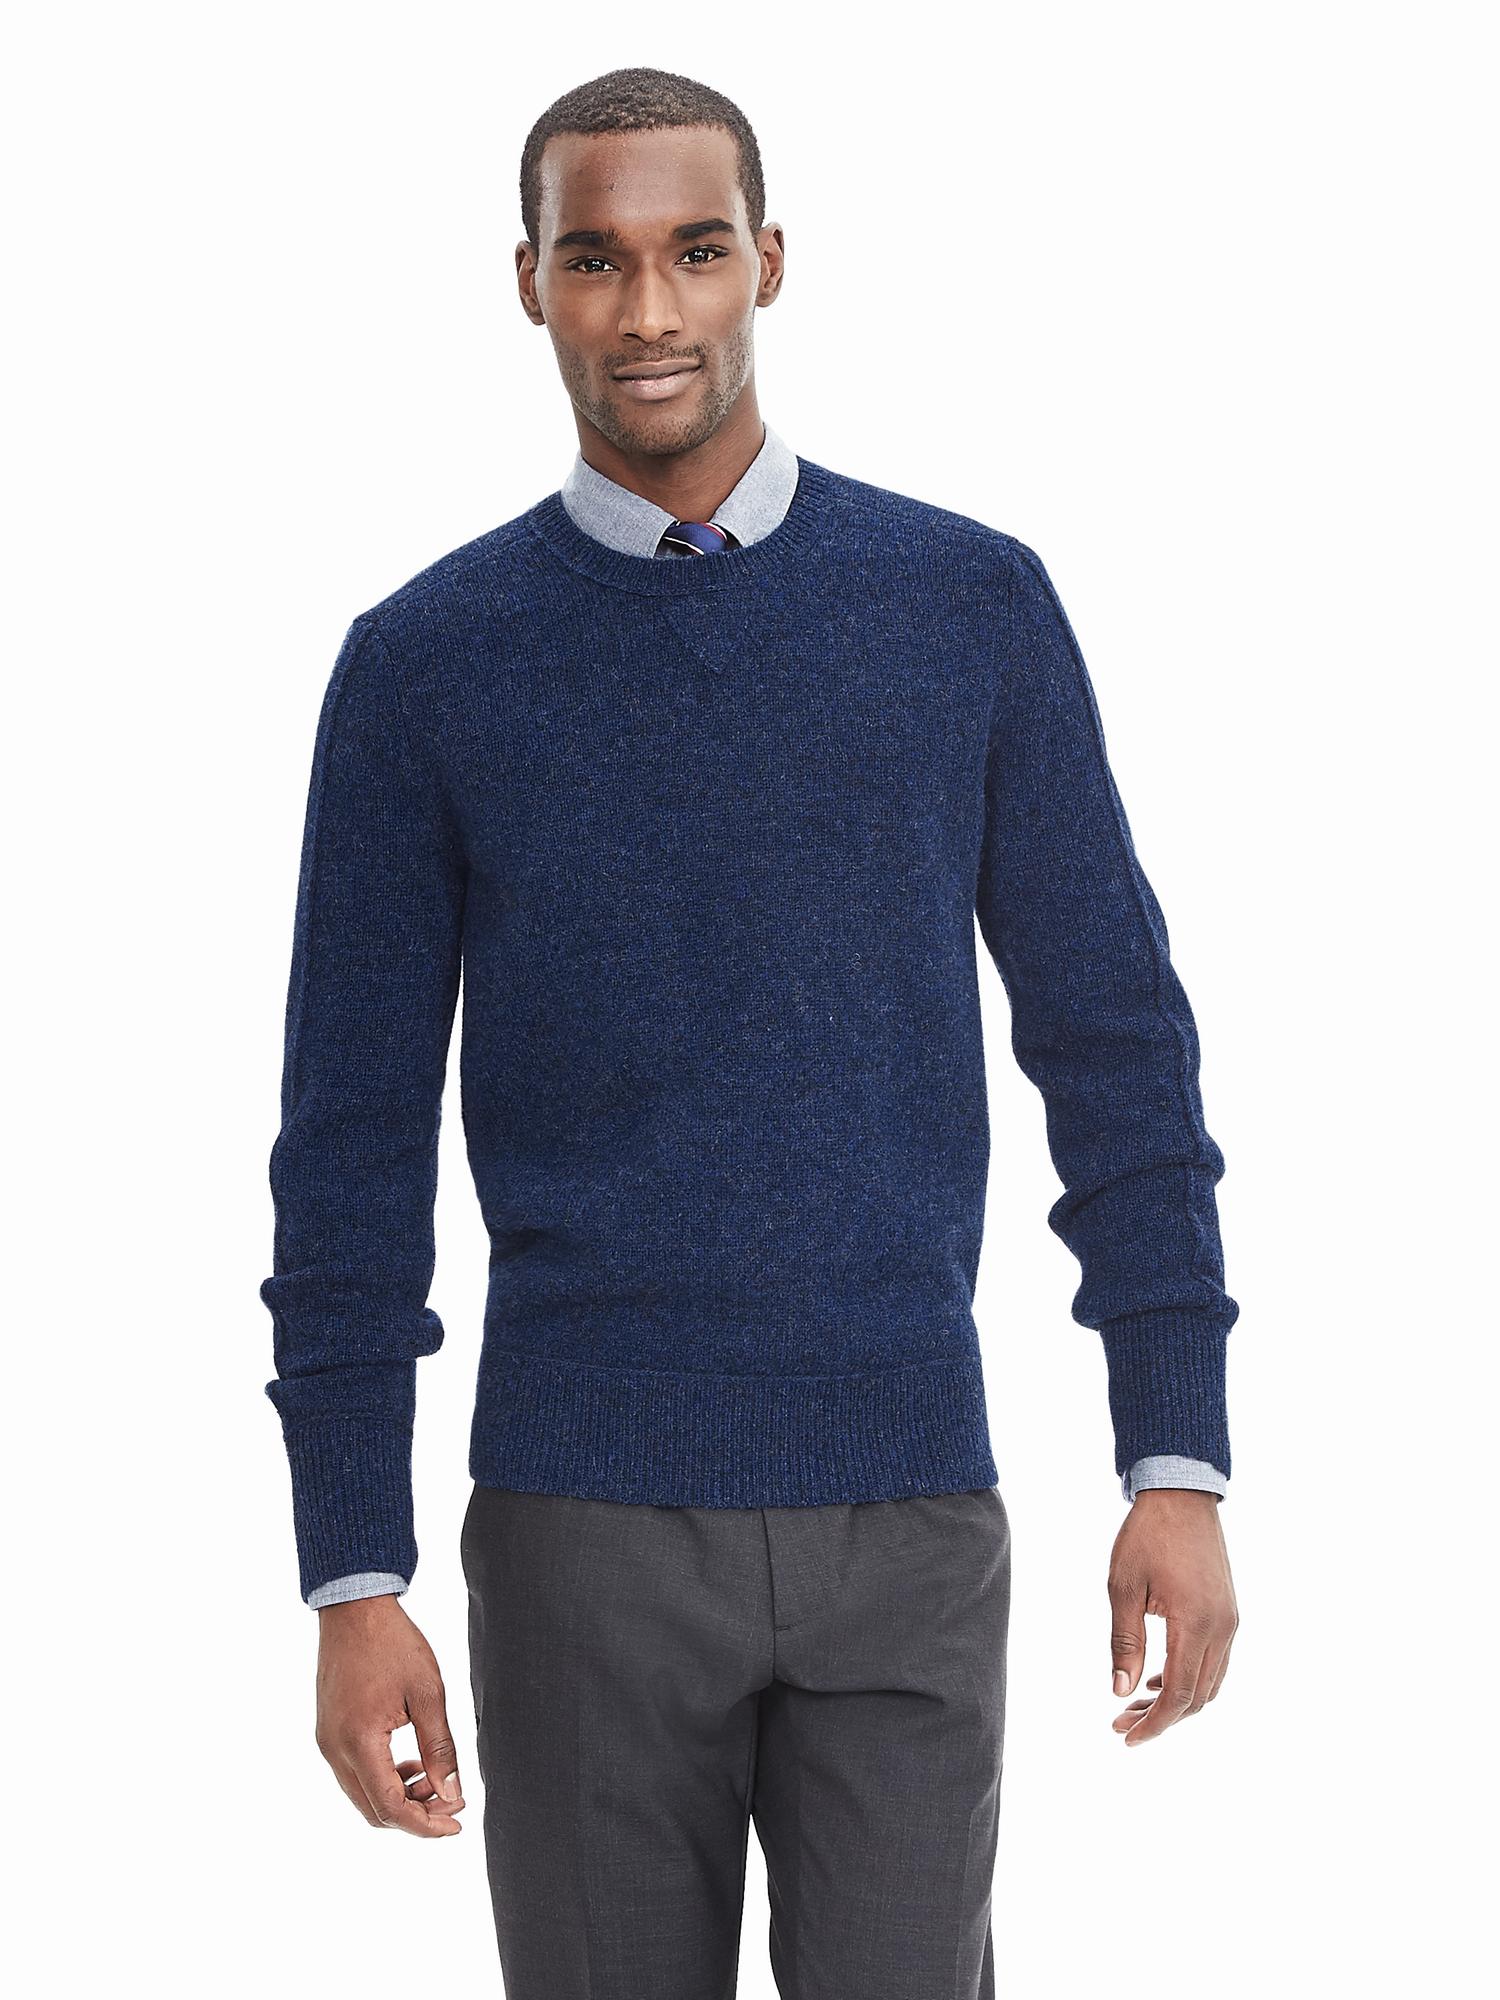 J.C. Rennie & Co. Shetland Wool Sweater Pullover | Banana Republic